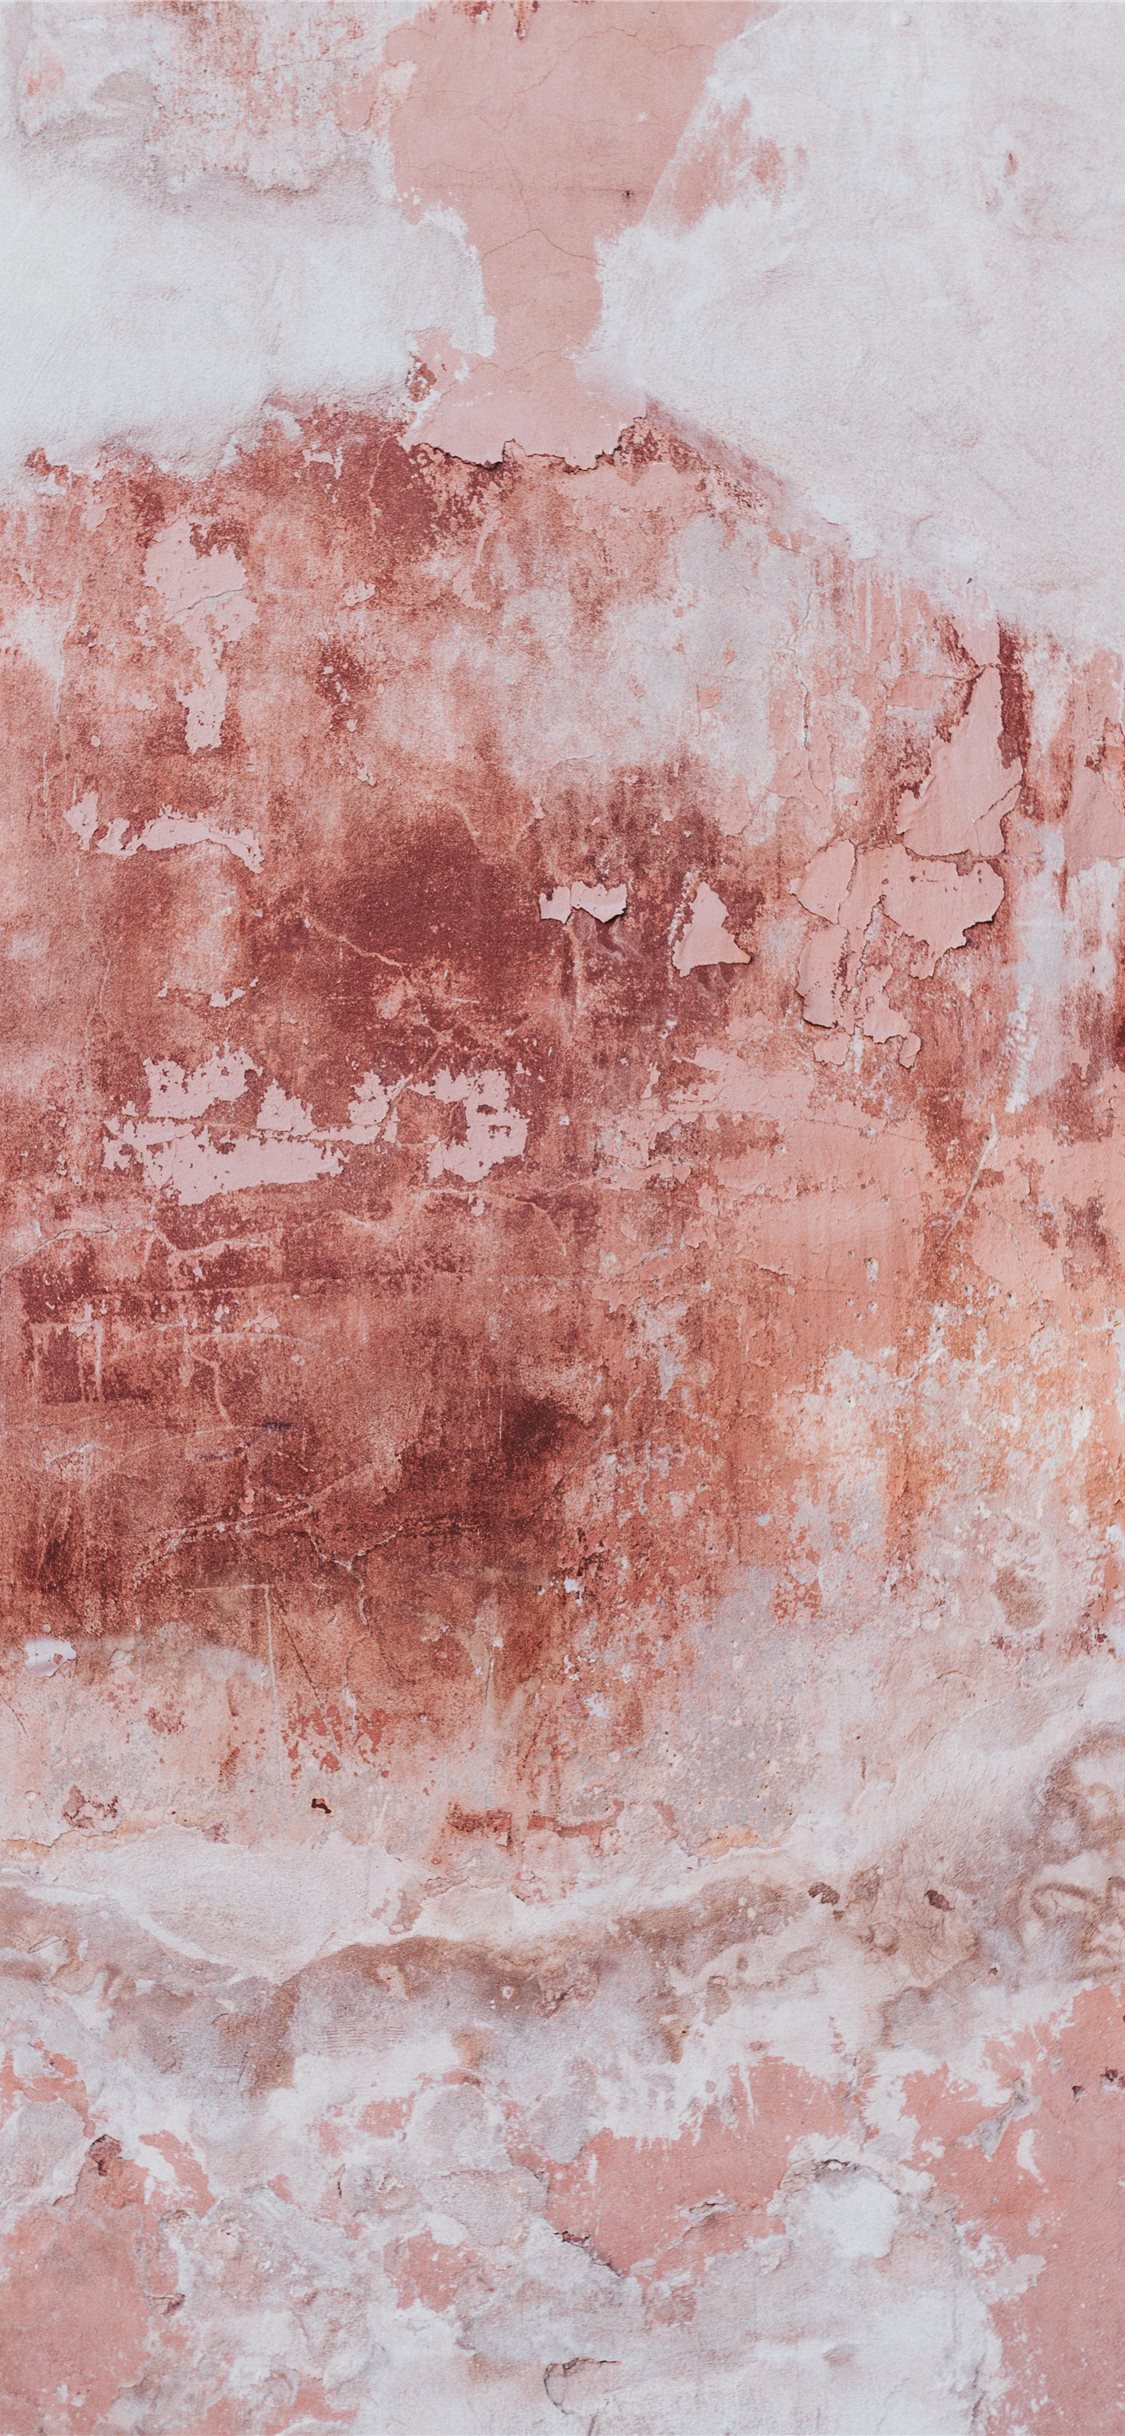 Pink Damaged Wall iPhone Wallpaper